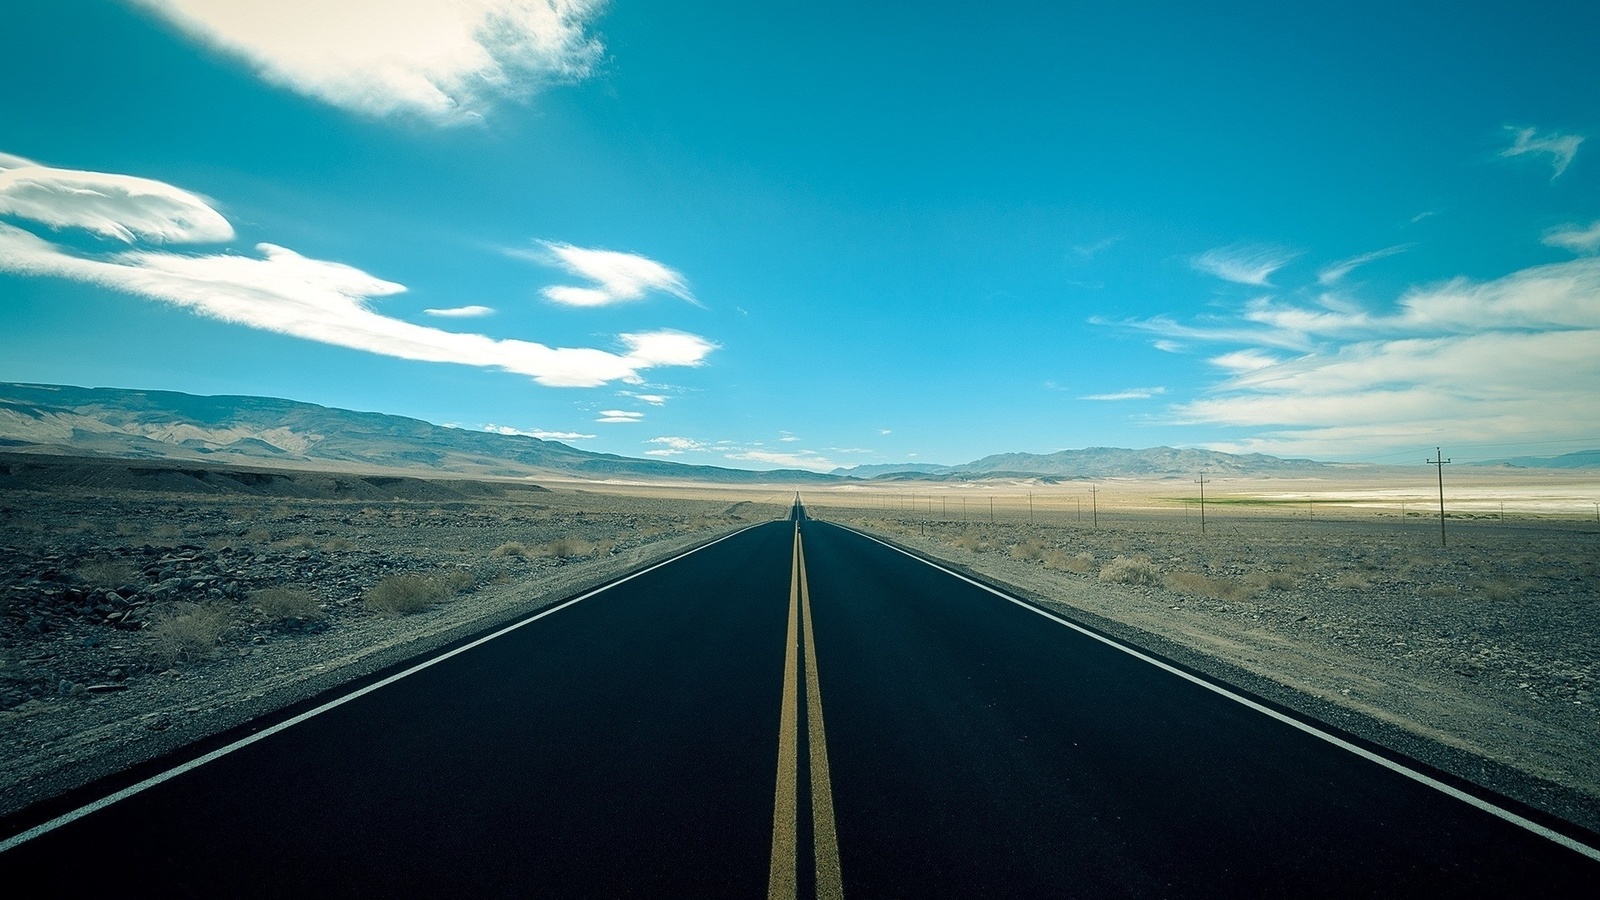 highway, desert, road, mountain